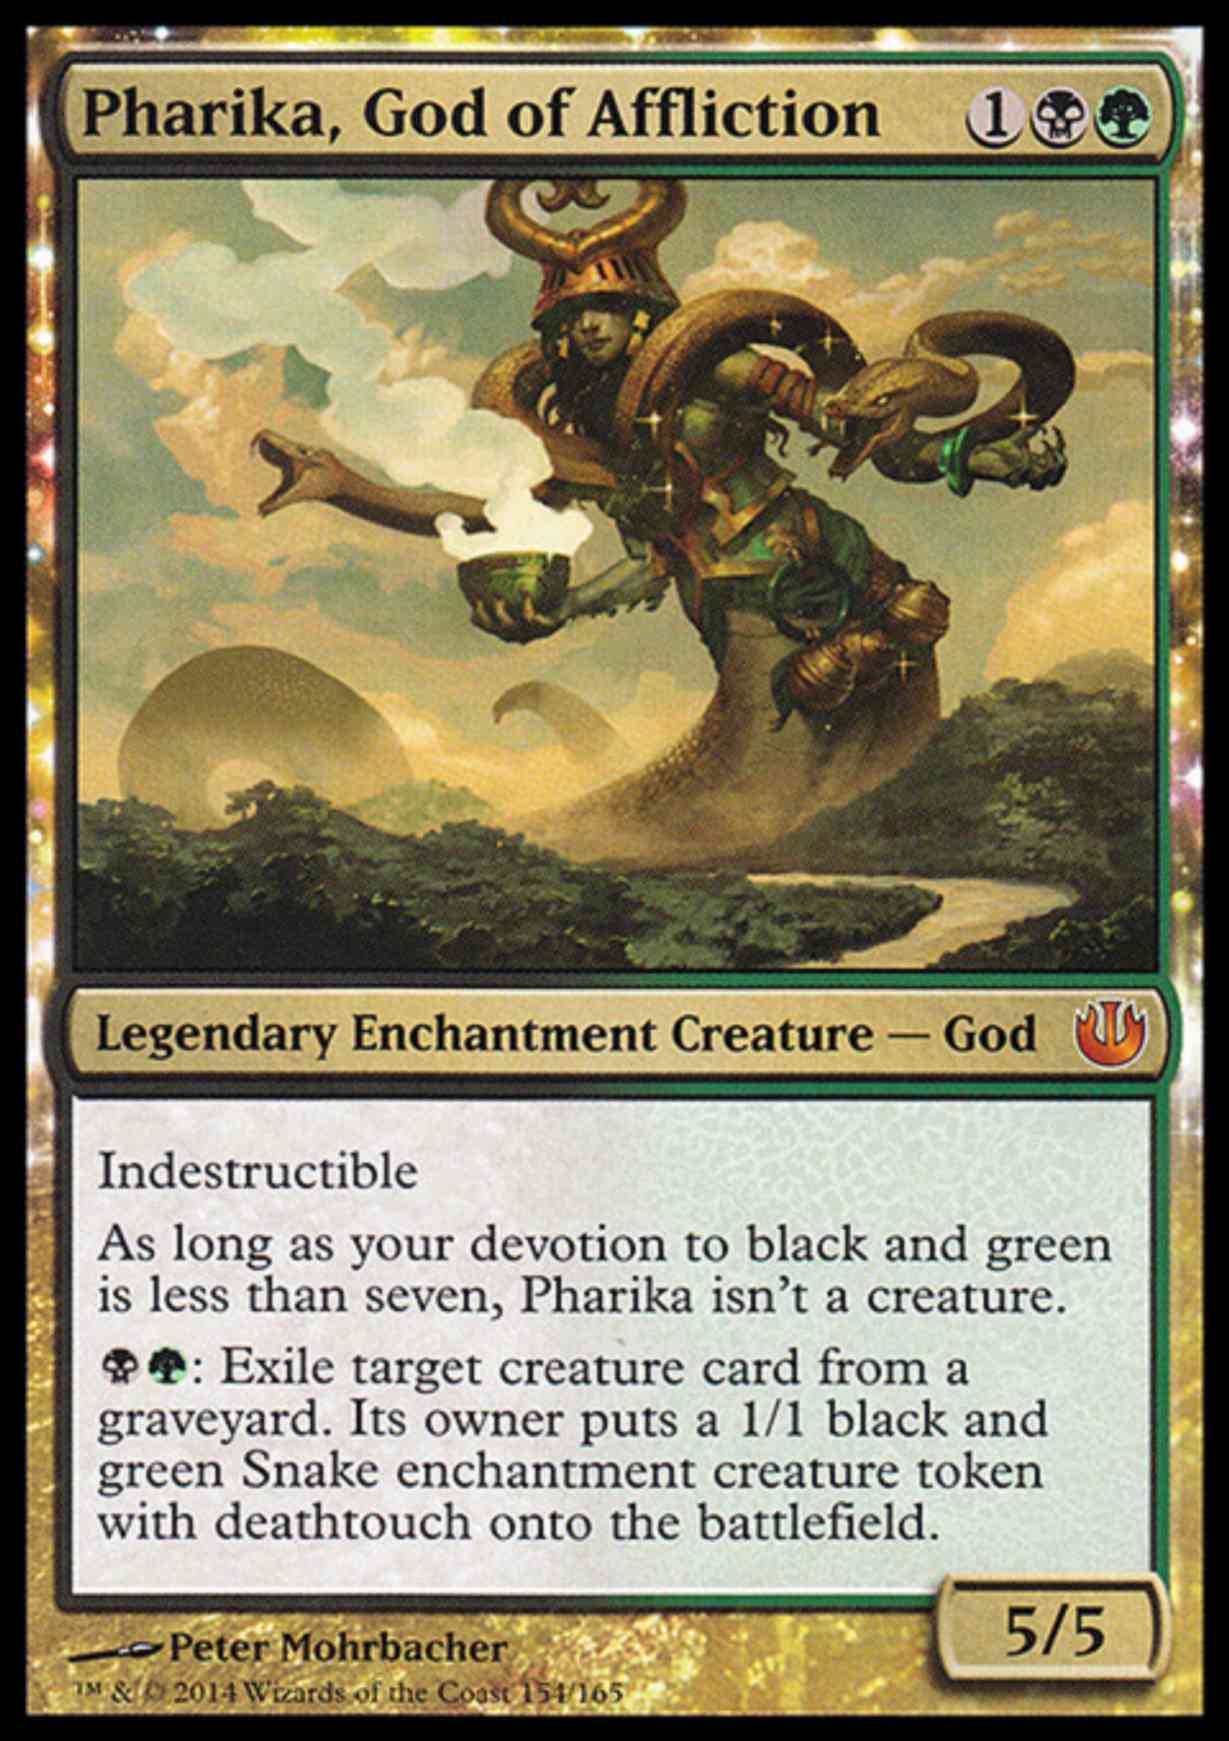 Pharika, God of Affliction magic card front